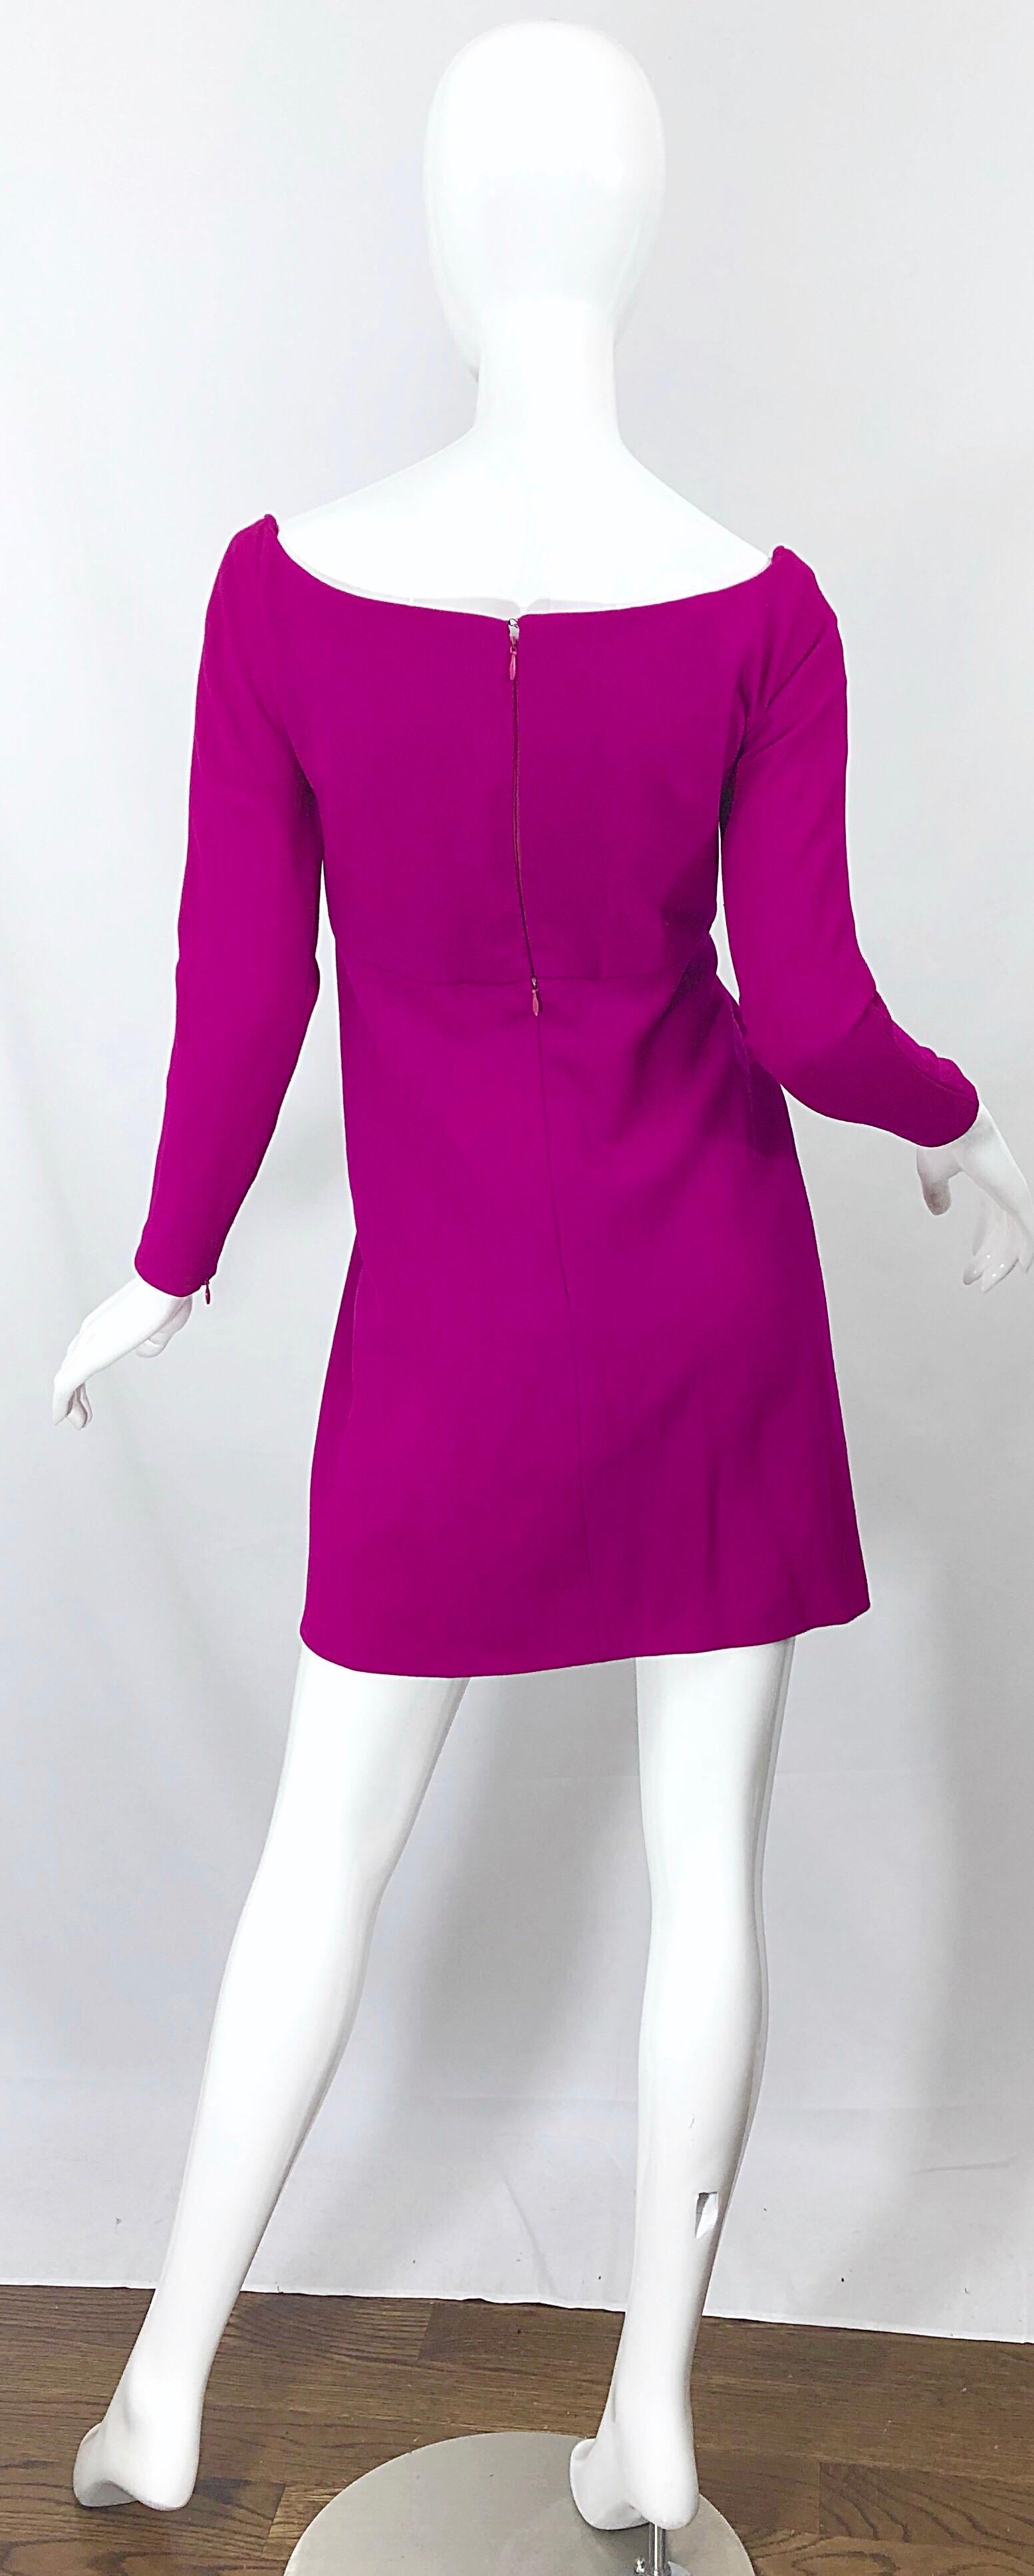 Carolyne Roehm 1990s Fuchsia Hot Pink Wool Vintage 90s Mini Empire Dress For Sale 1